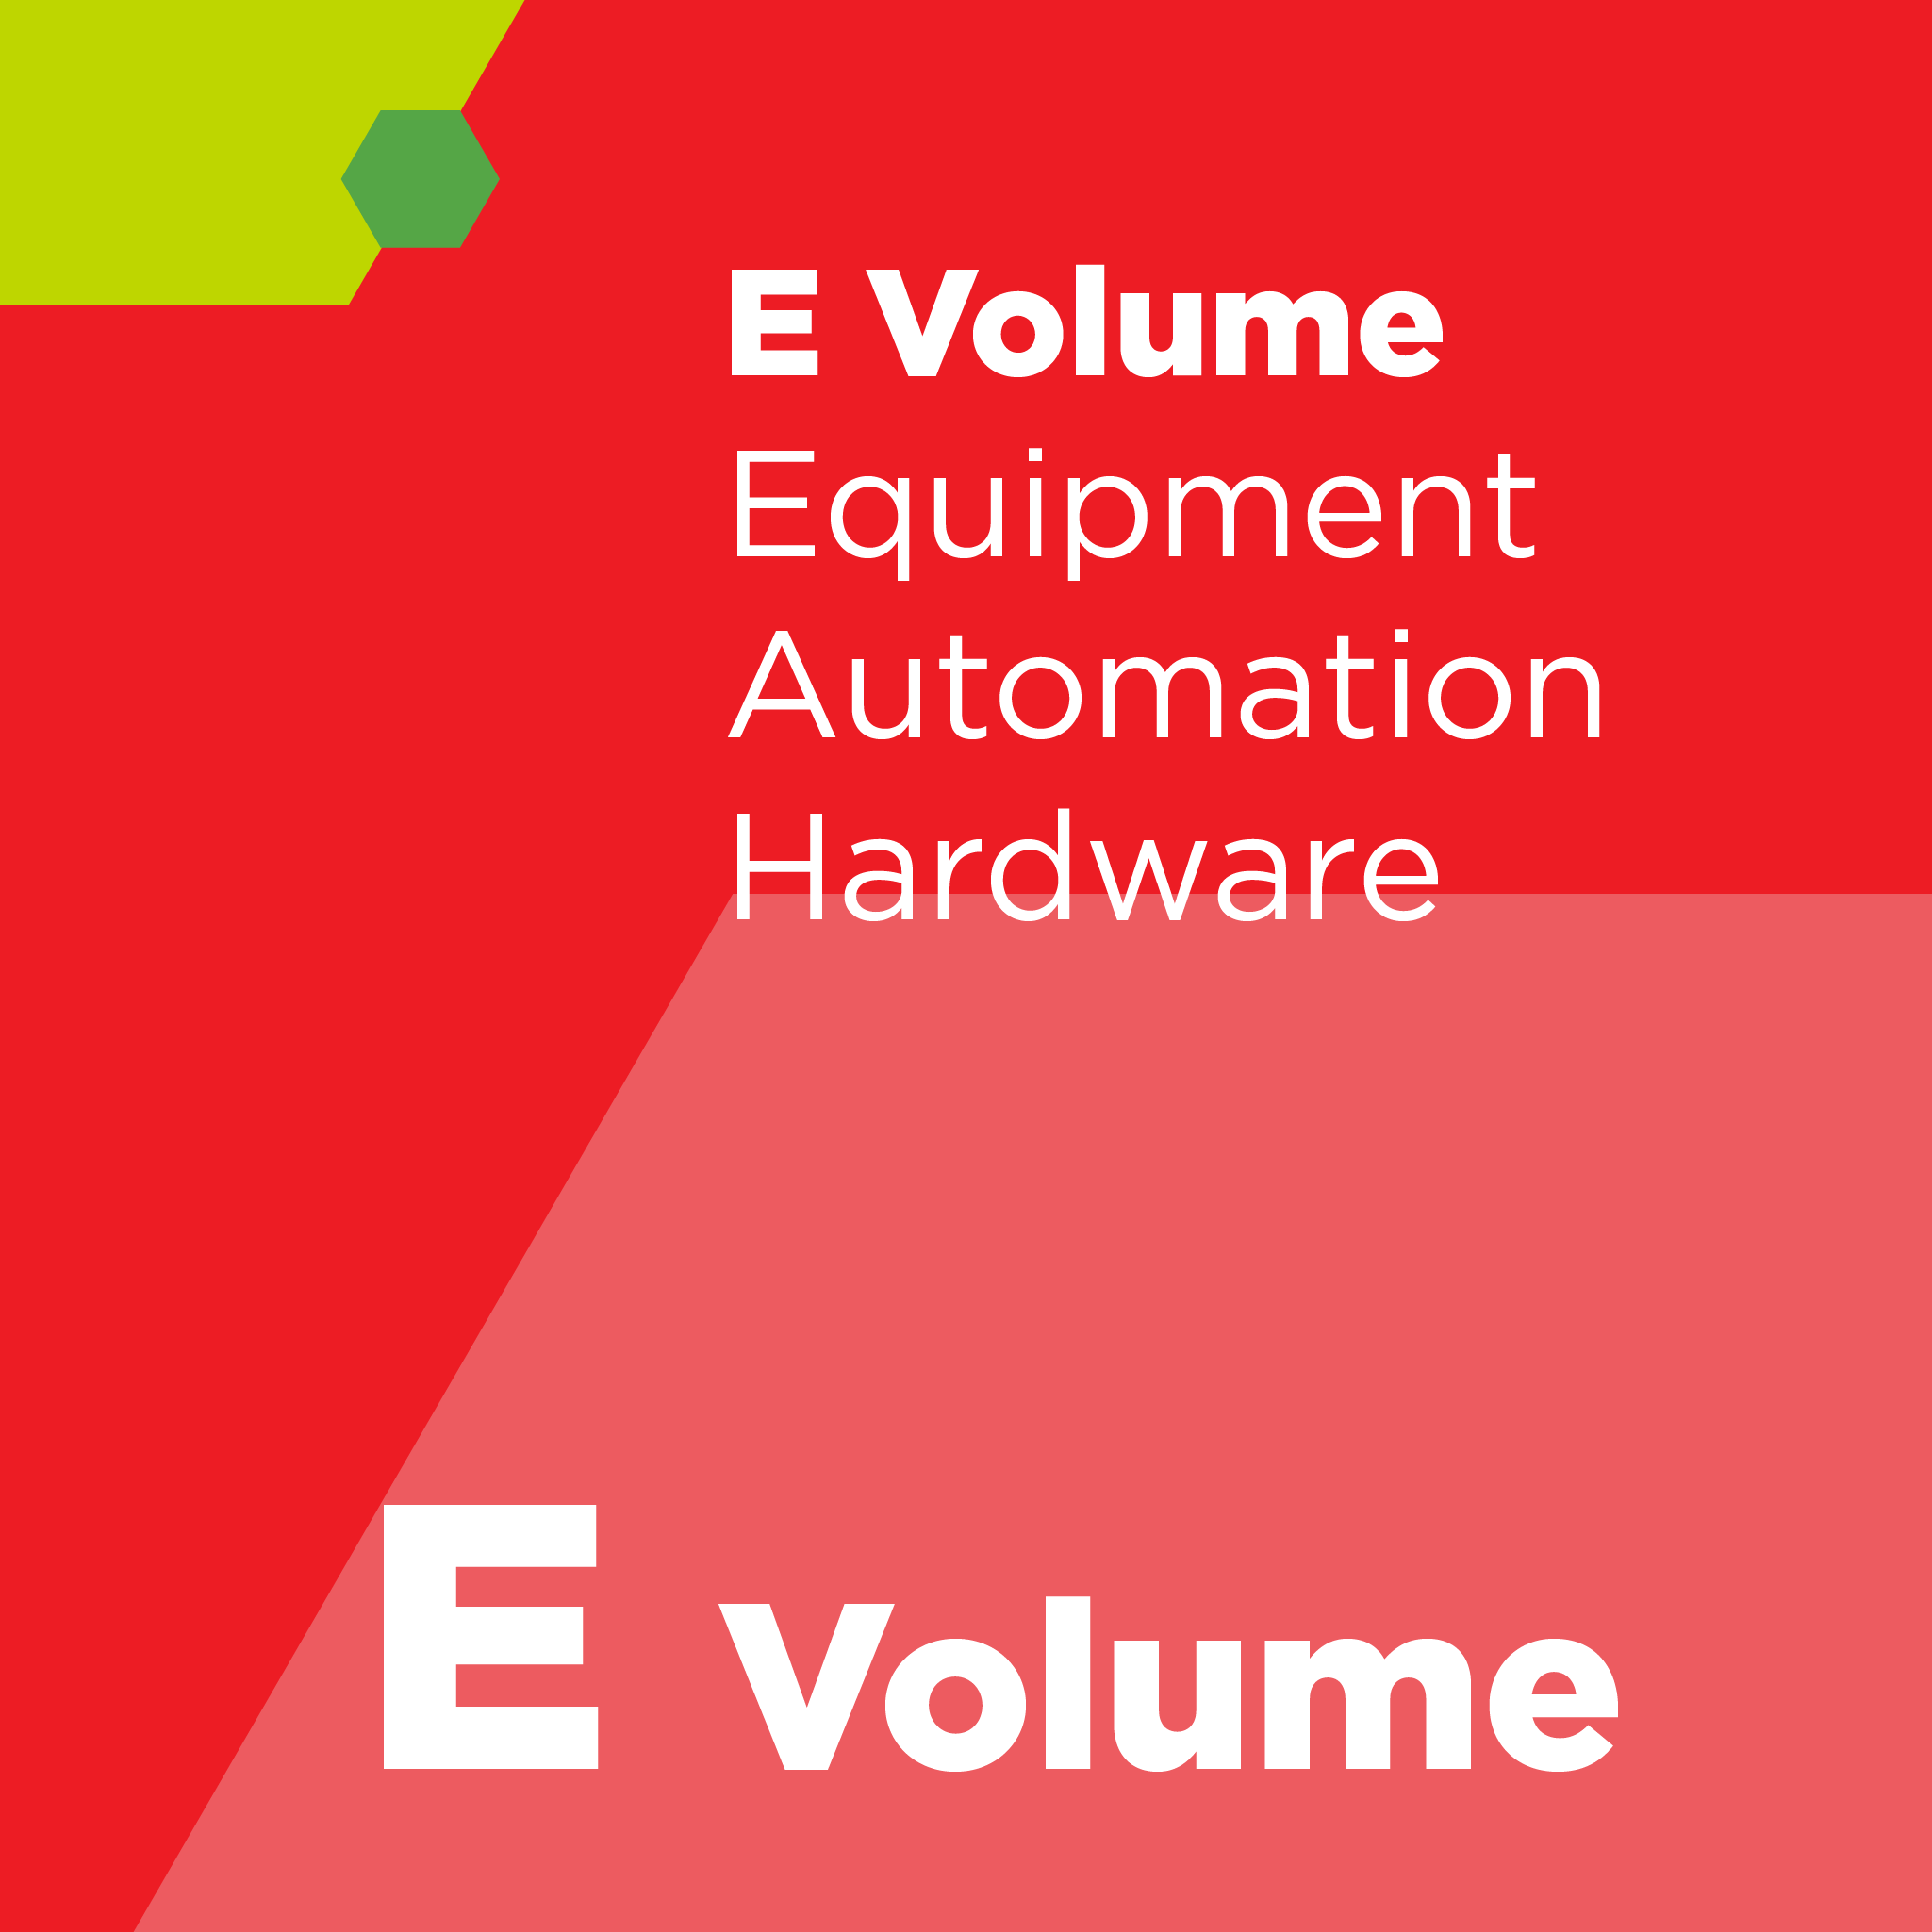 E00600 - SEMI E6 - 半導体製造装置の設置に関する文書のガイド